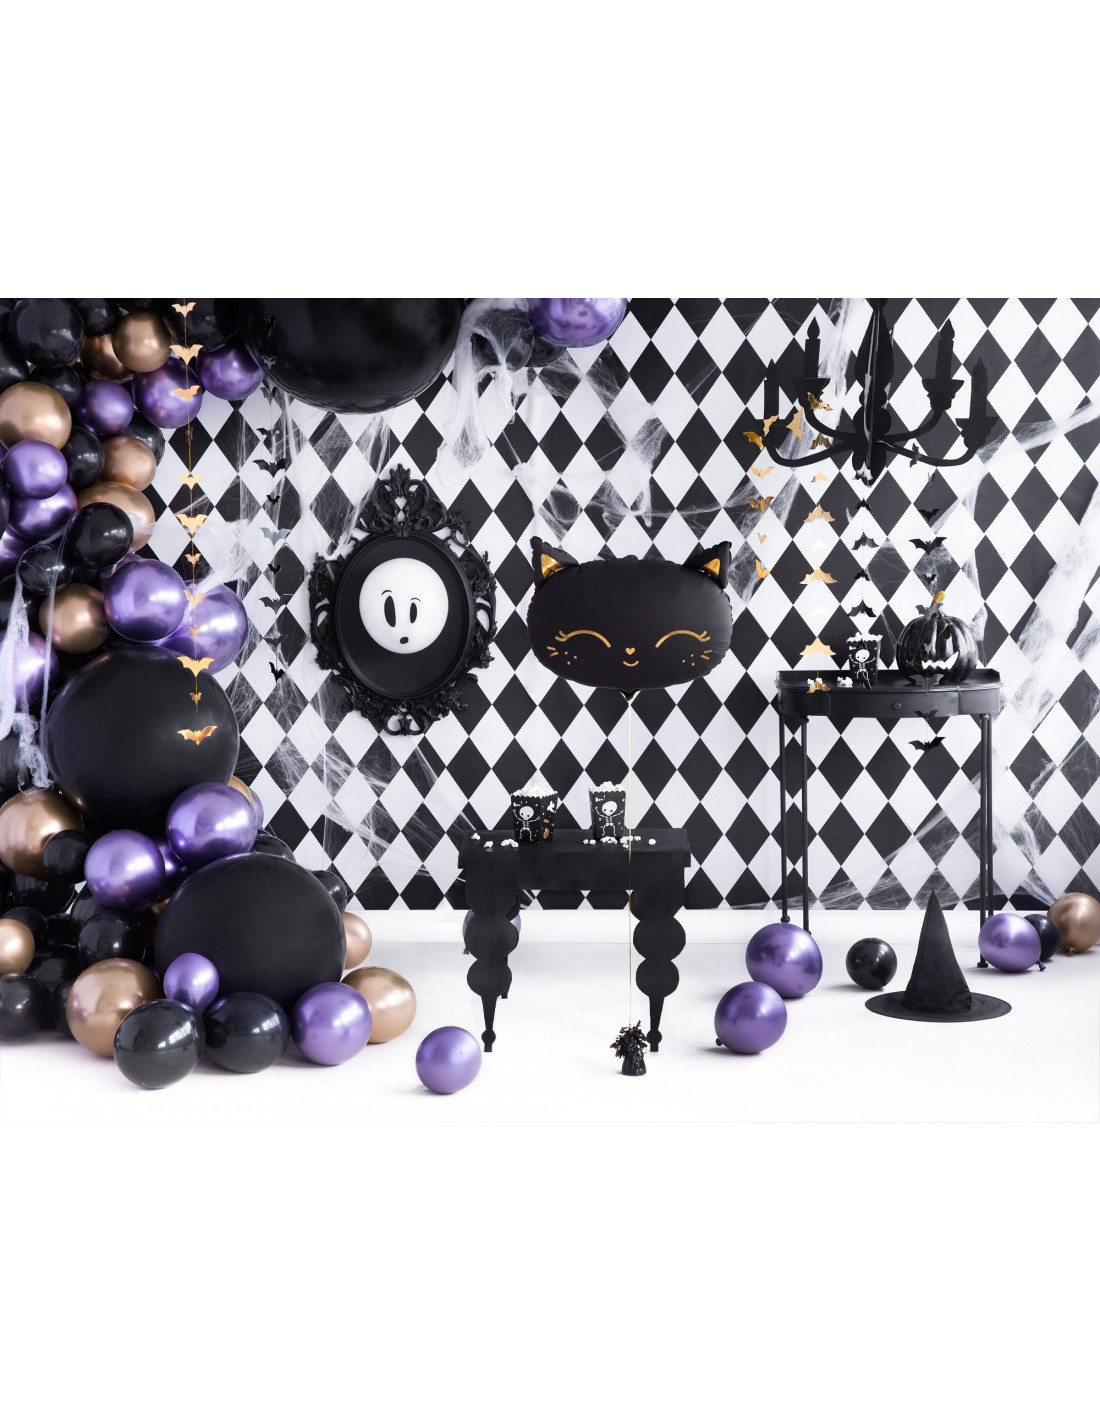 10 Ballons de Baudruche Chrome Violet - Les Bambetises